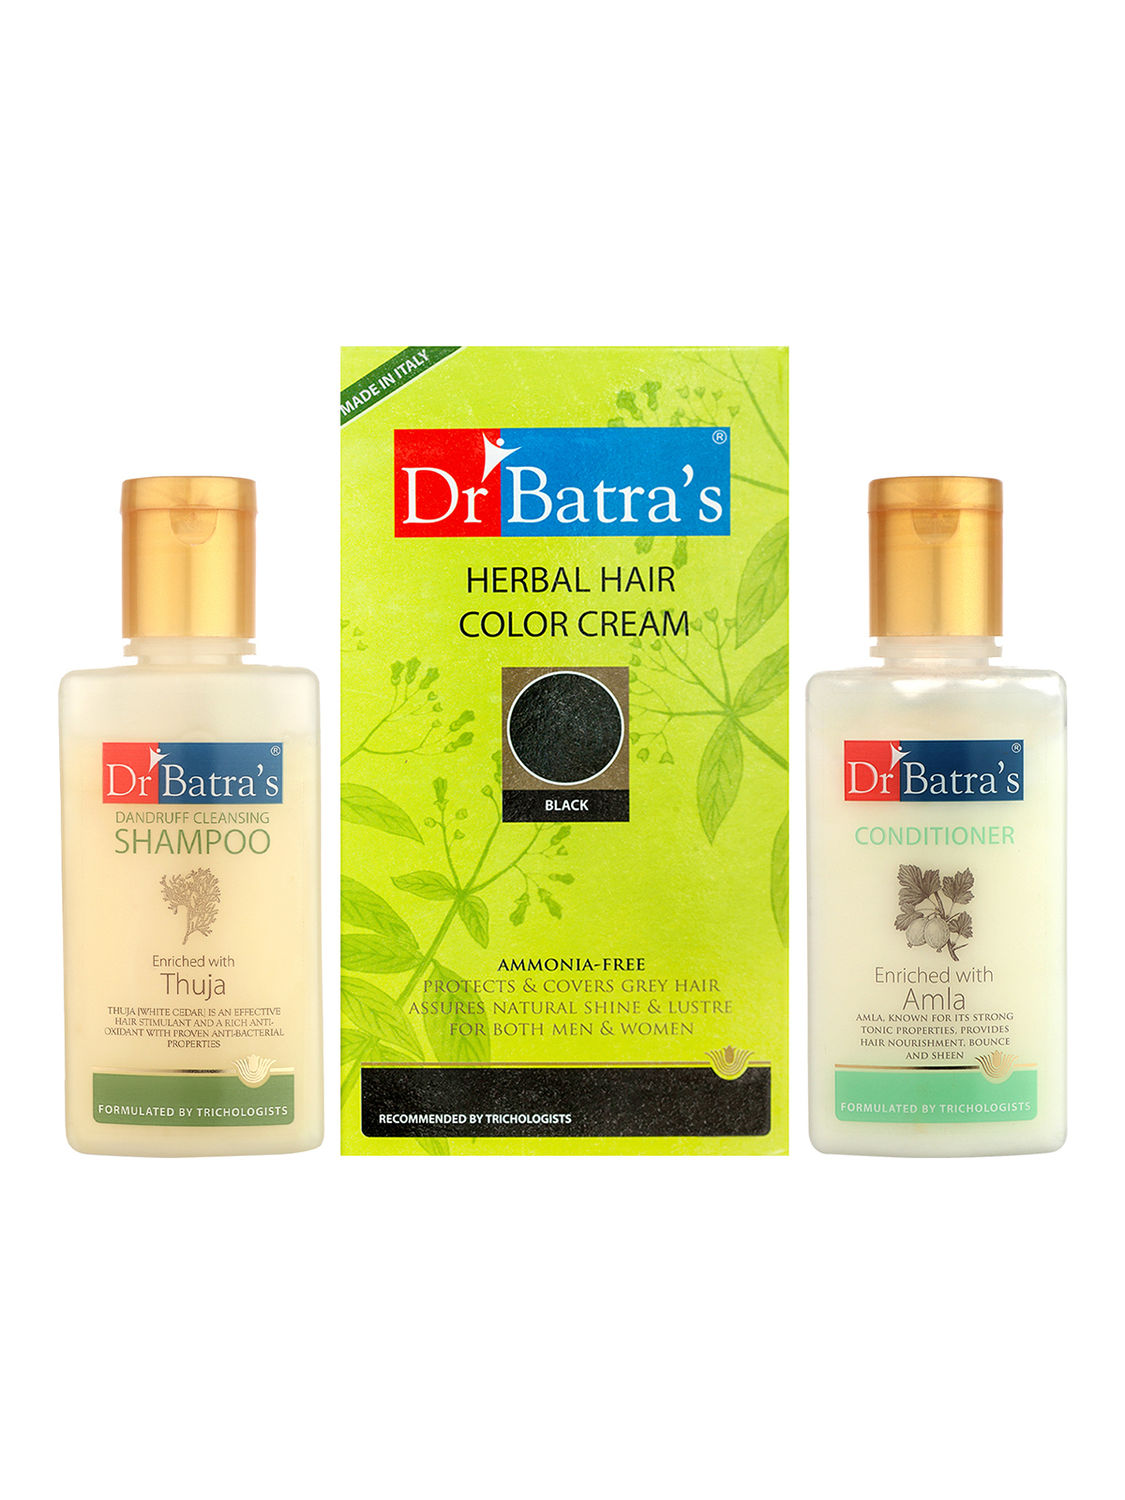 Dr Batra  HVT  Hair treatment  Honest review  Package details and  Process  Vlog  YouTube